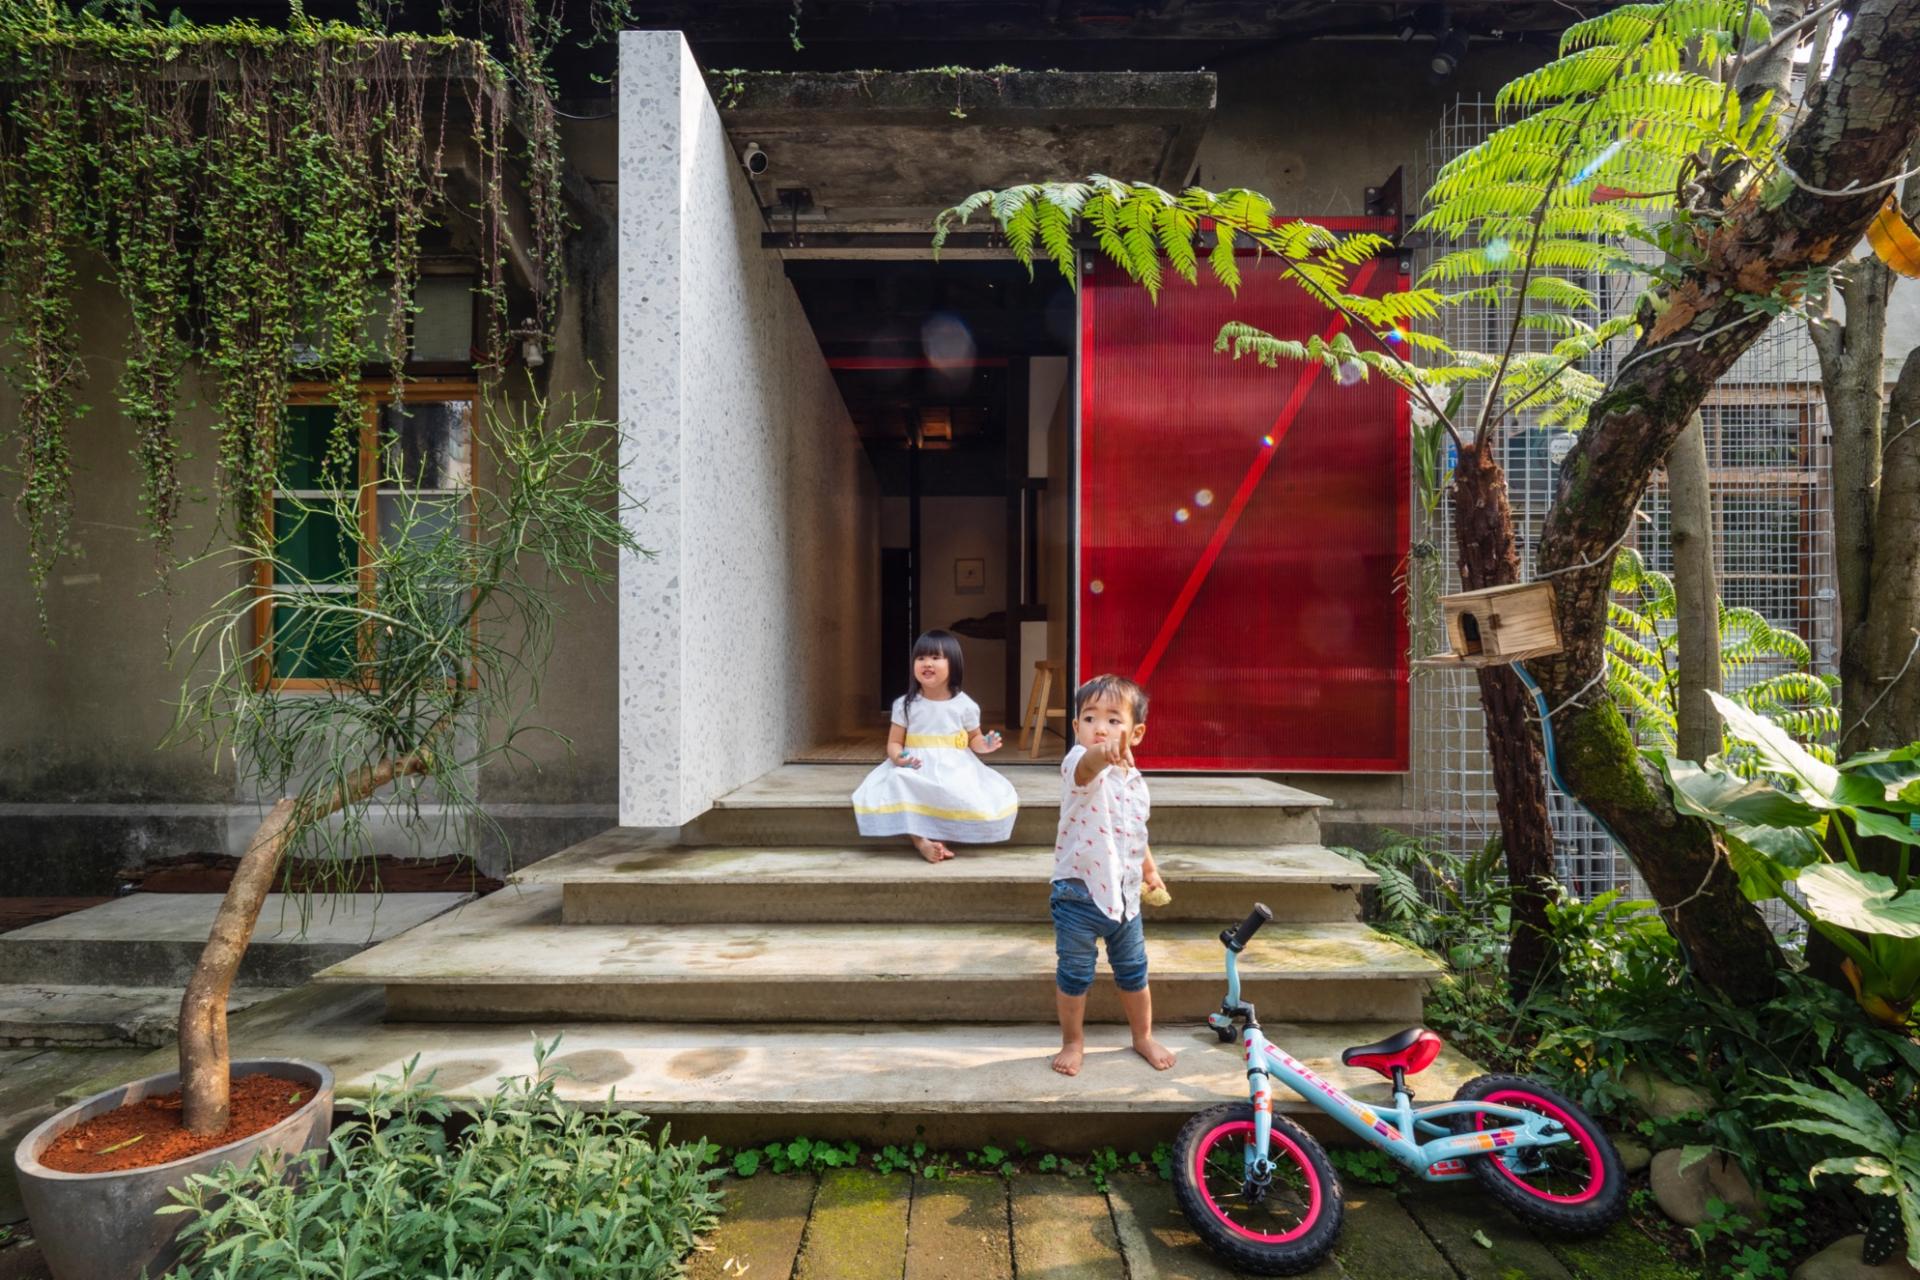 JCA Living Lab unpacks the harmonious life values of an aged Japanese-style dormitory